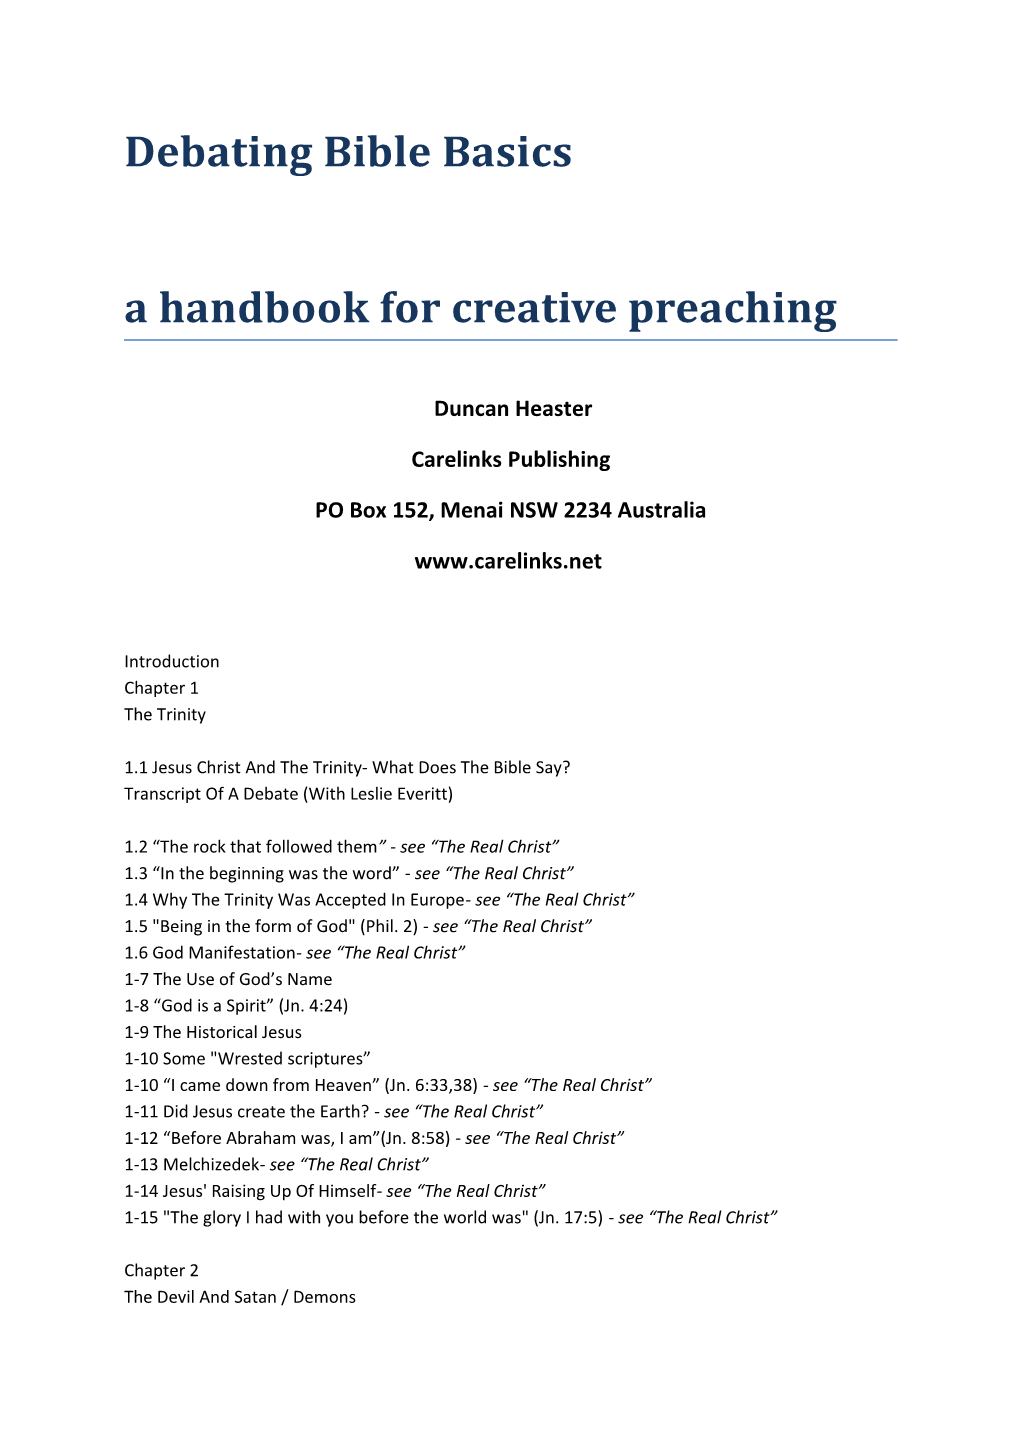 A Handbook for Creative Preaching